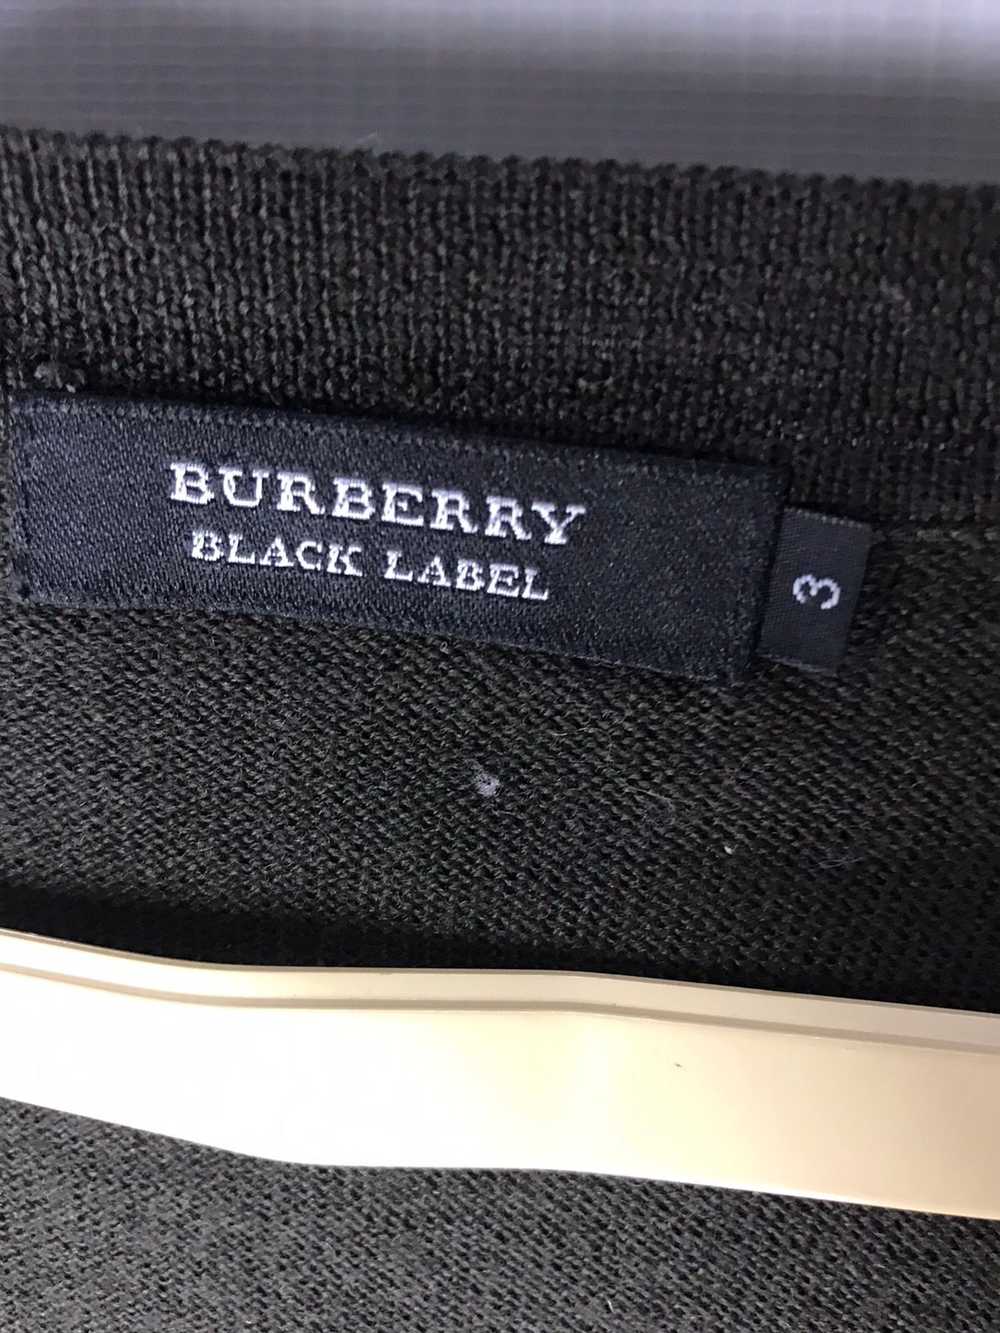 Burberry Burberry Black Label Knit Cardigan - image 3